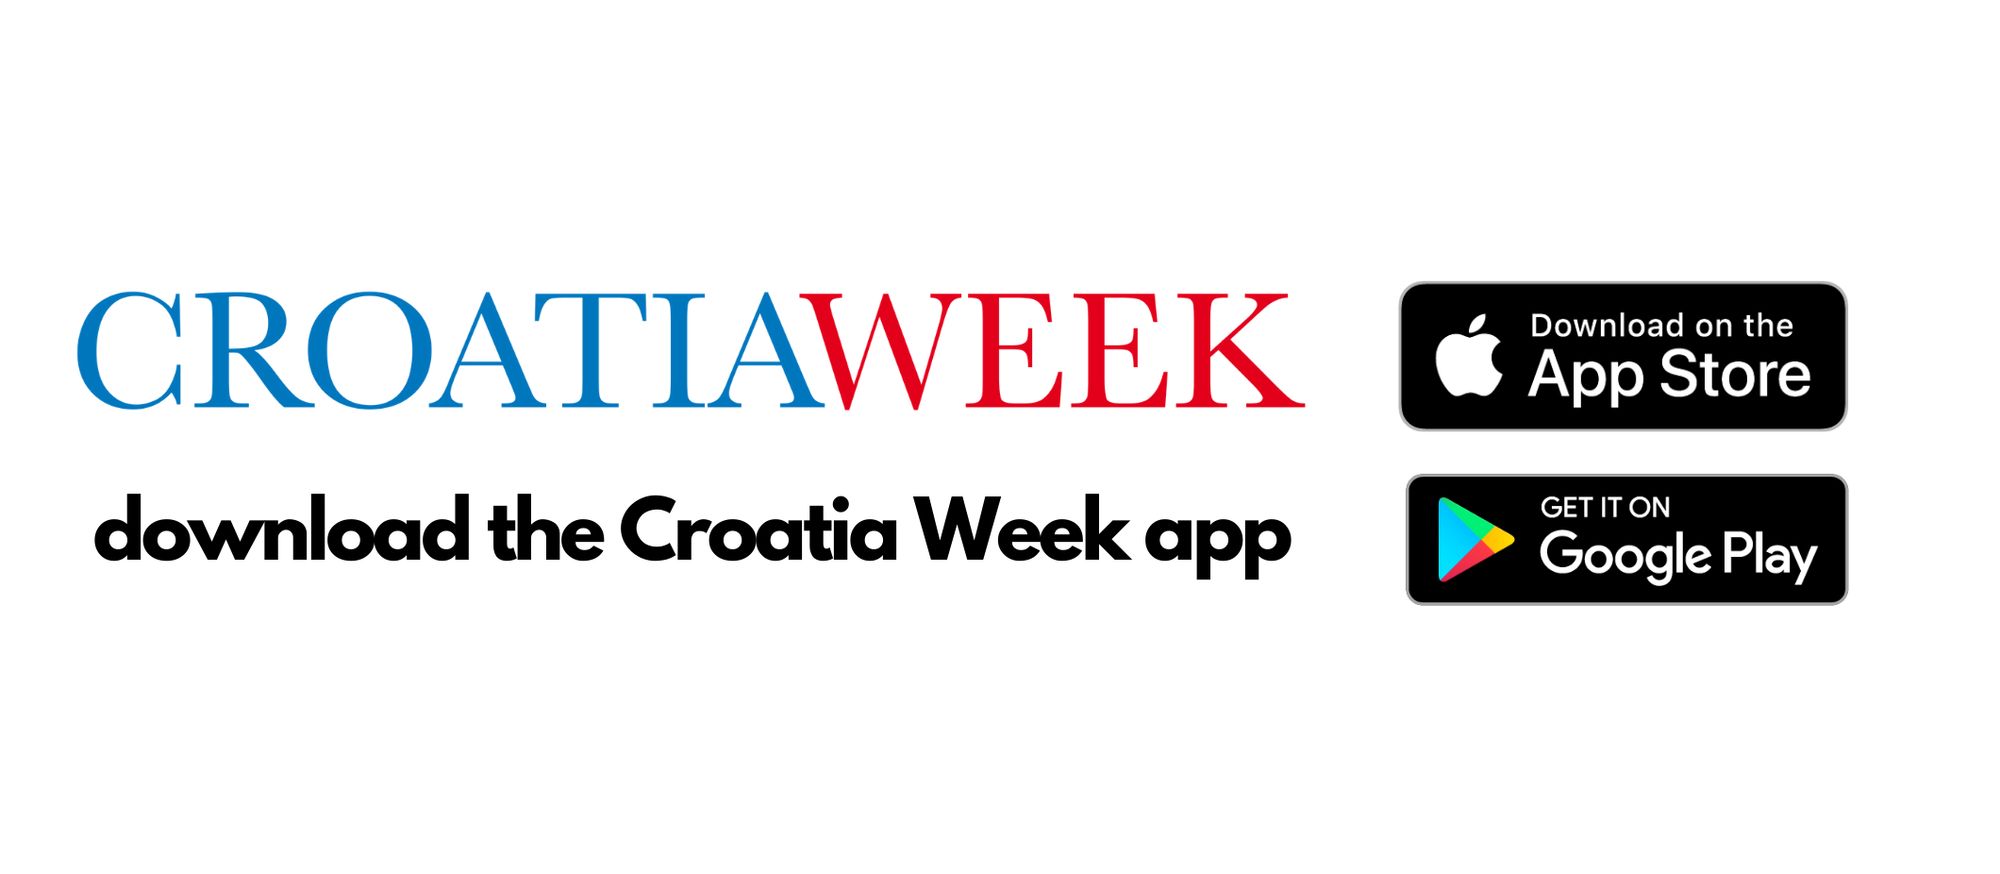 Download the Croatia Week app